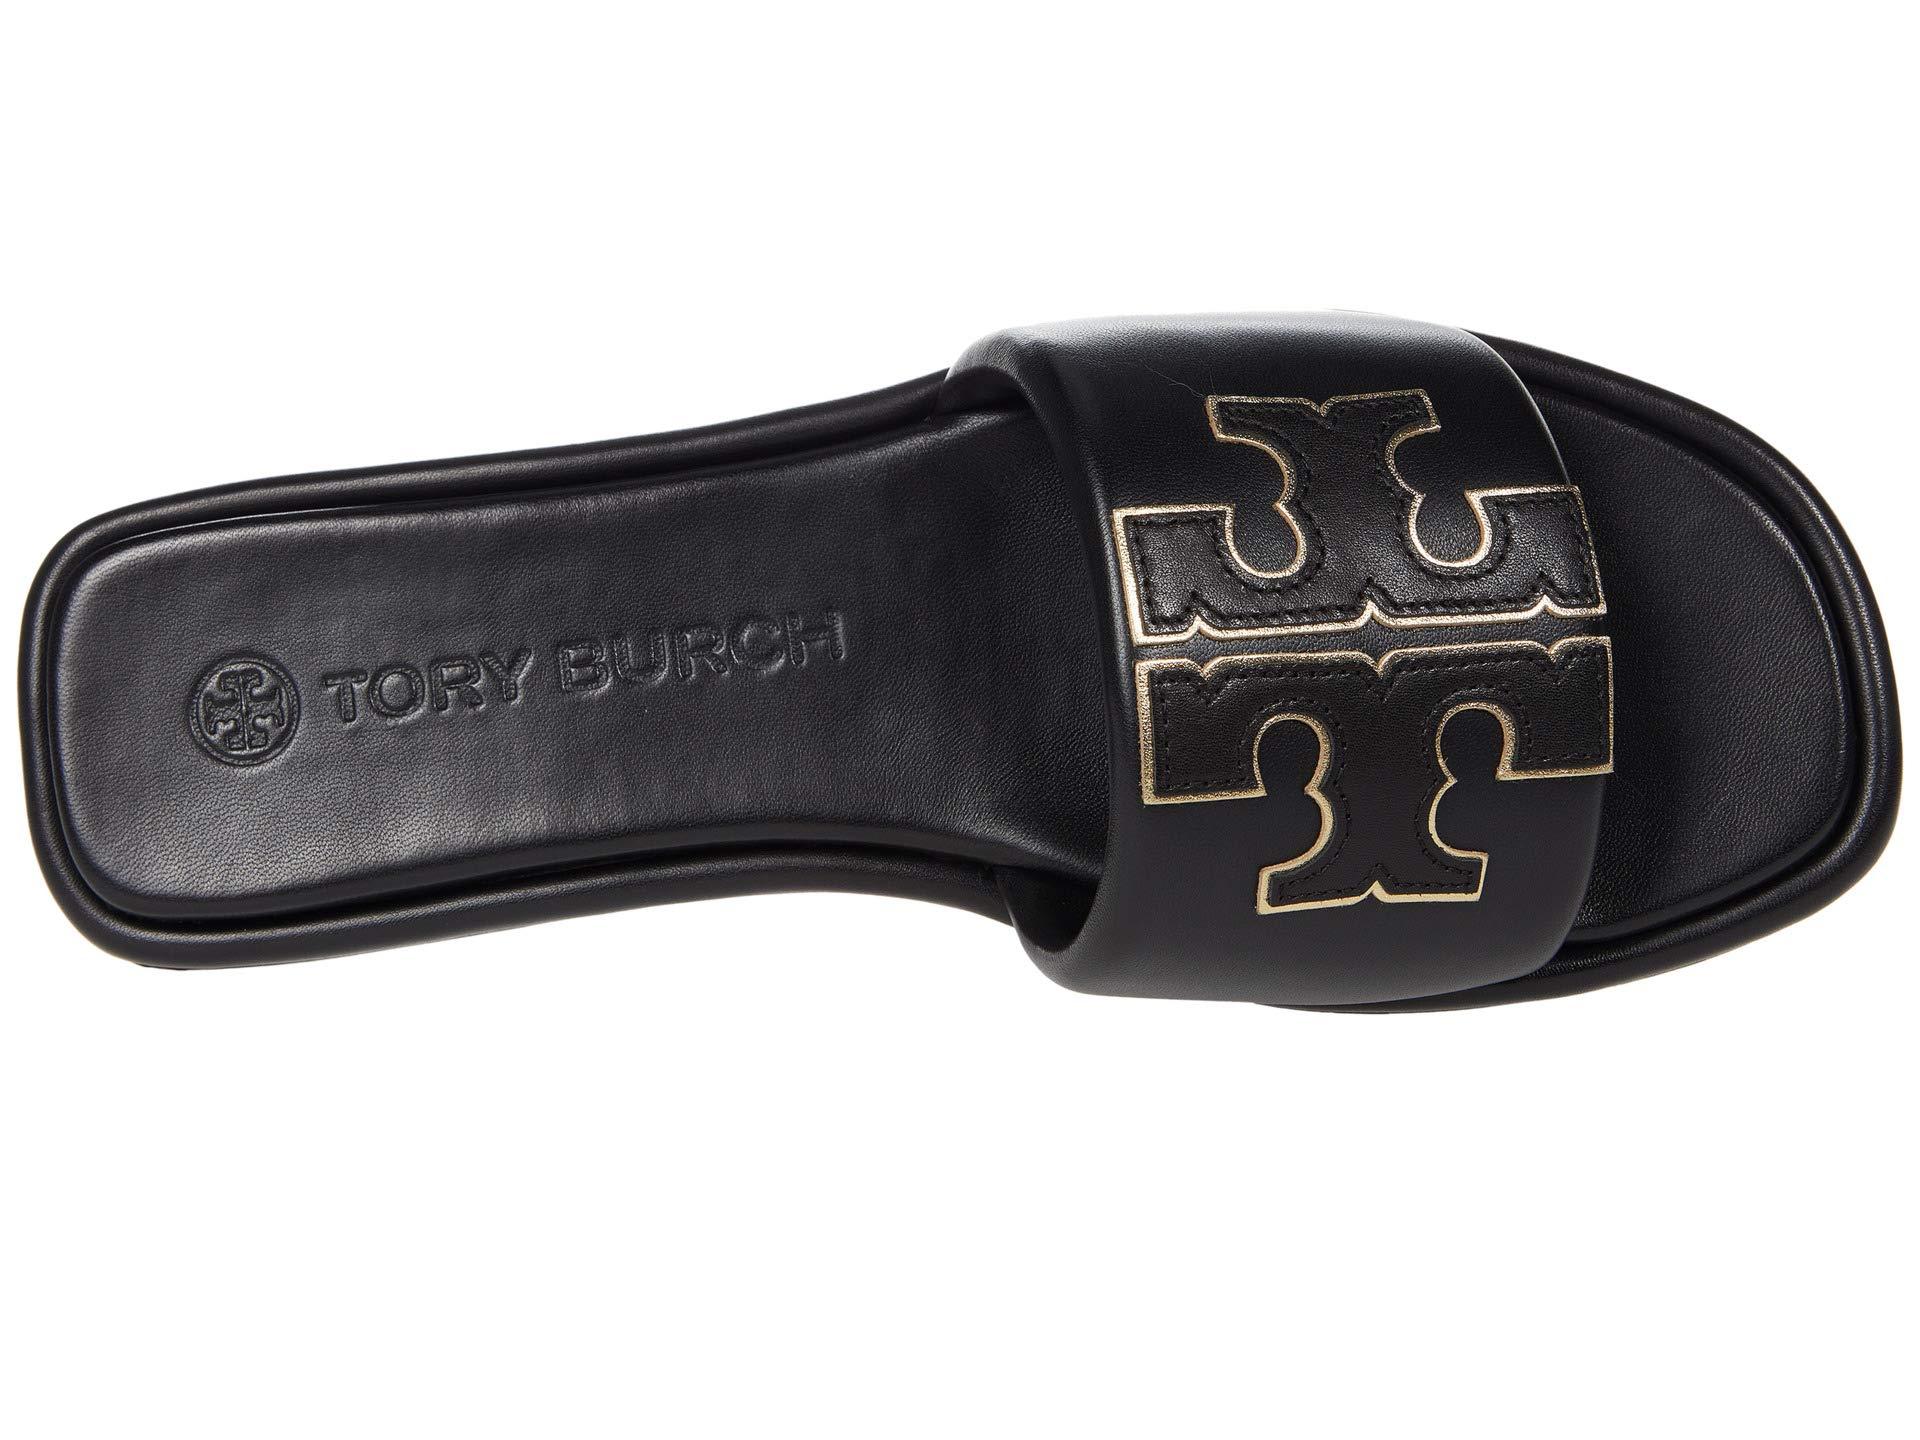 Tory Burch Leather Double T Sport Slide in Black - Lyst